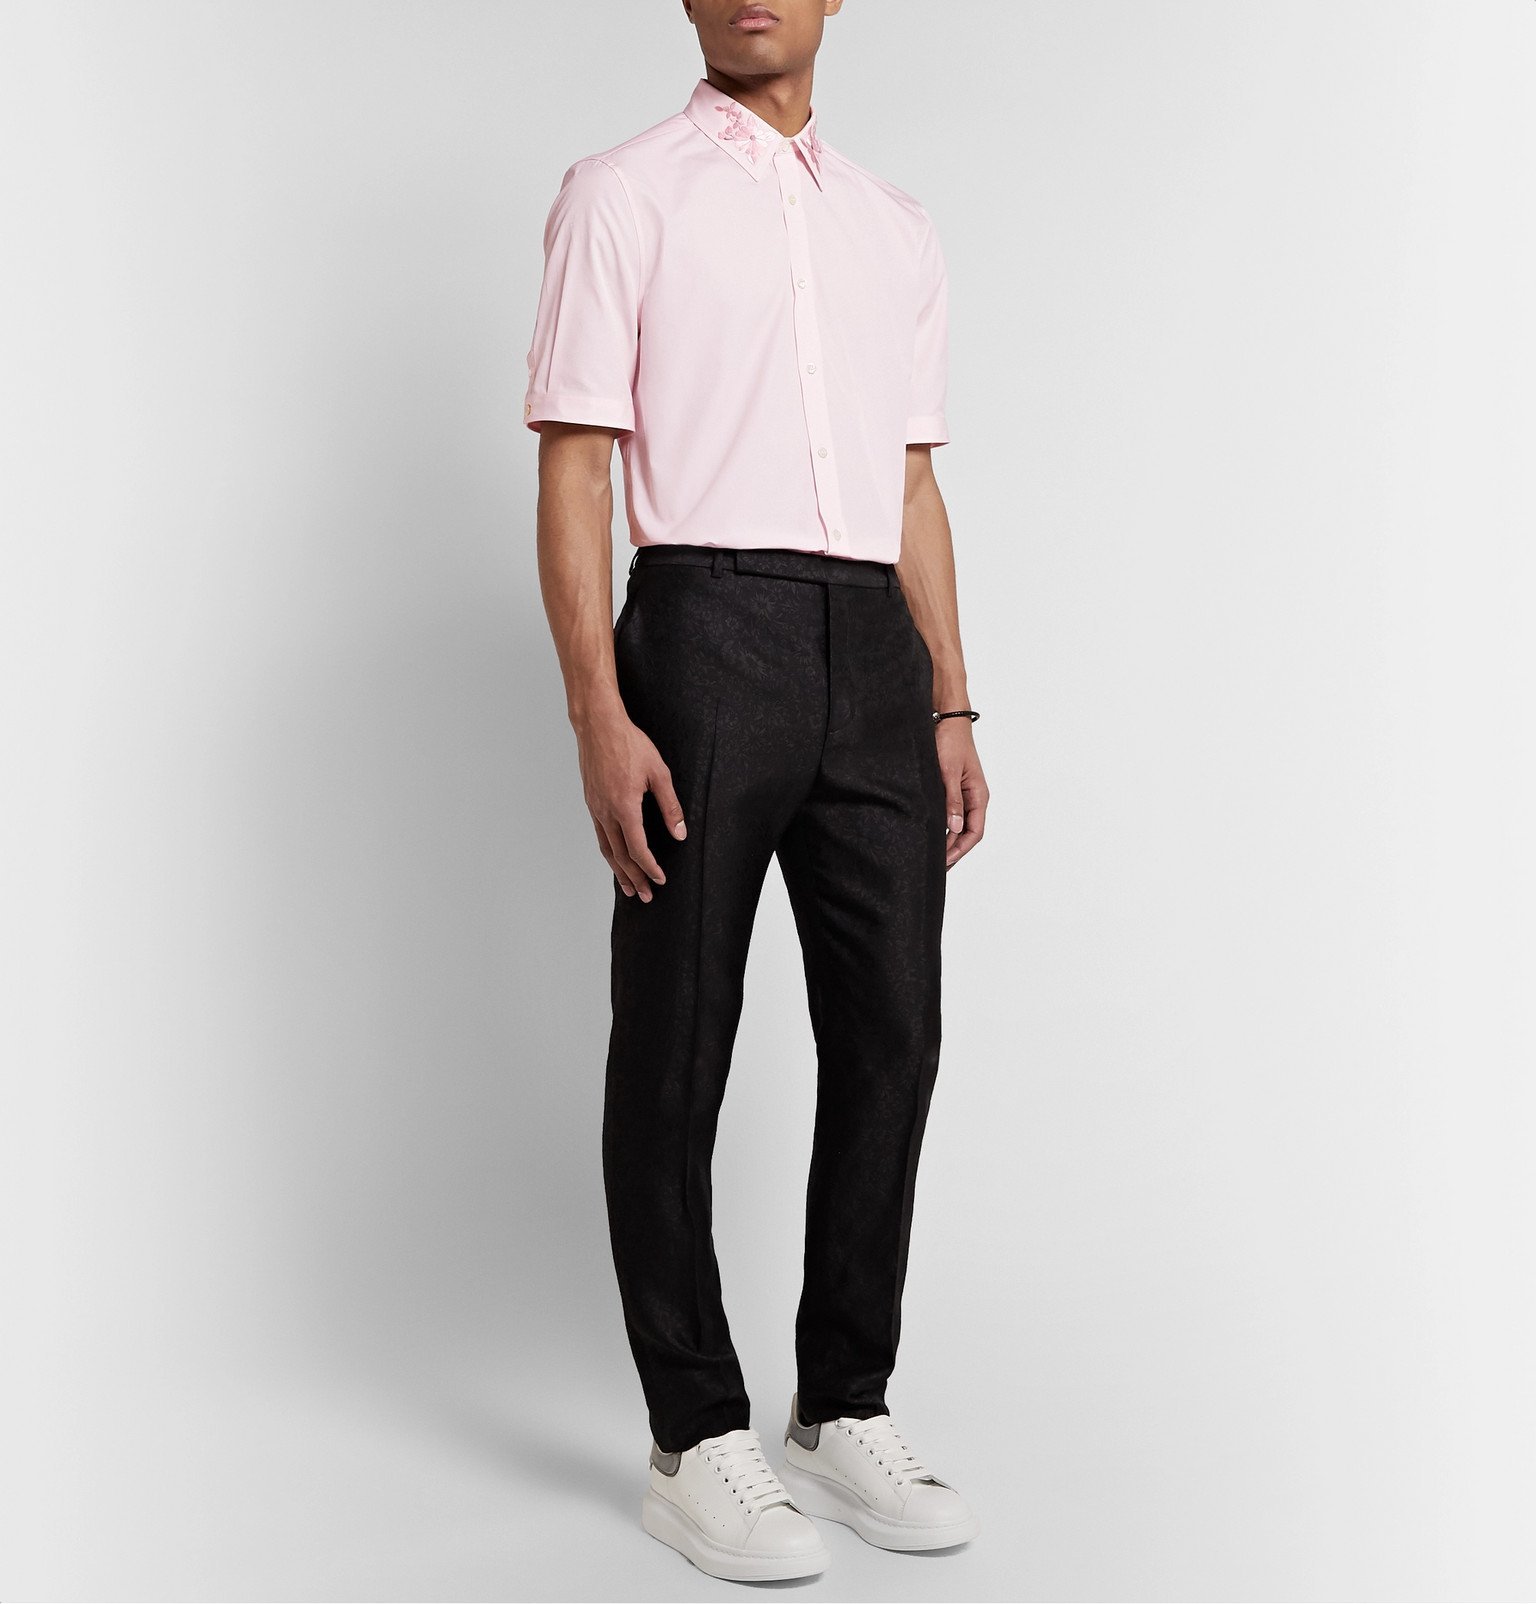 Alexander McQueen - Embroidered Cotton-Poplin Shirt - Pink 